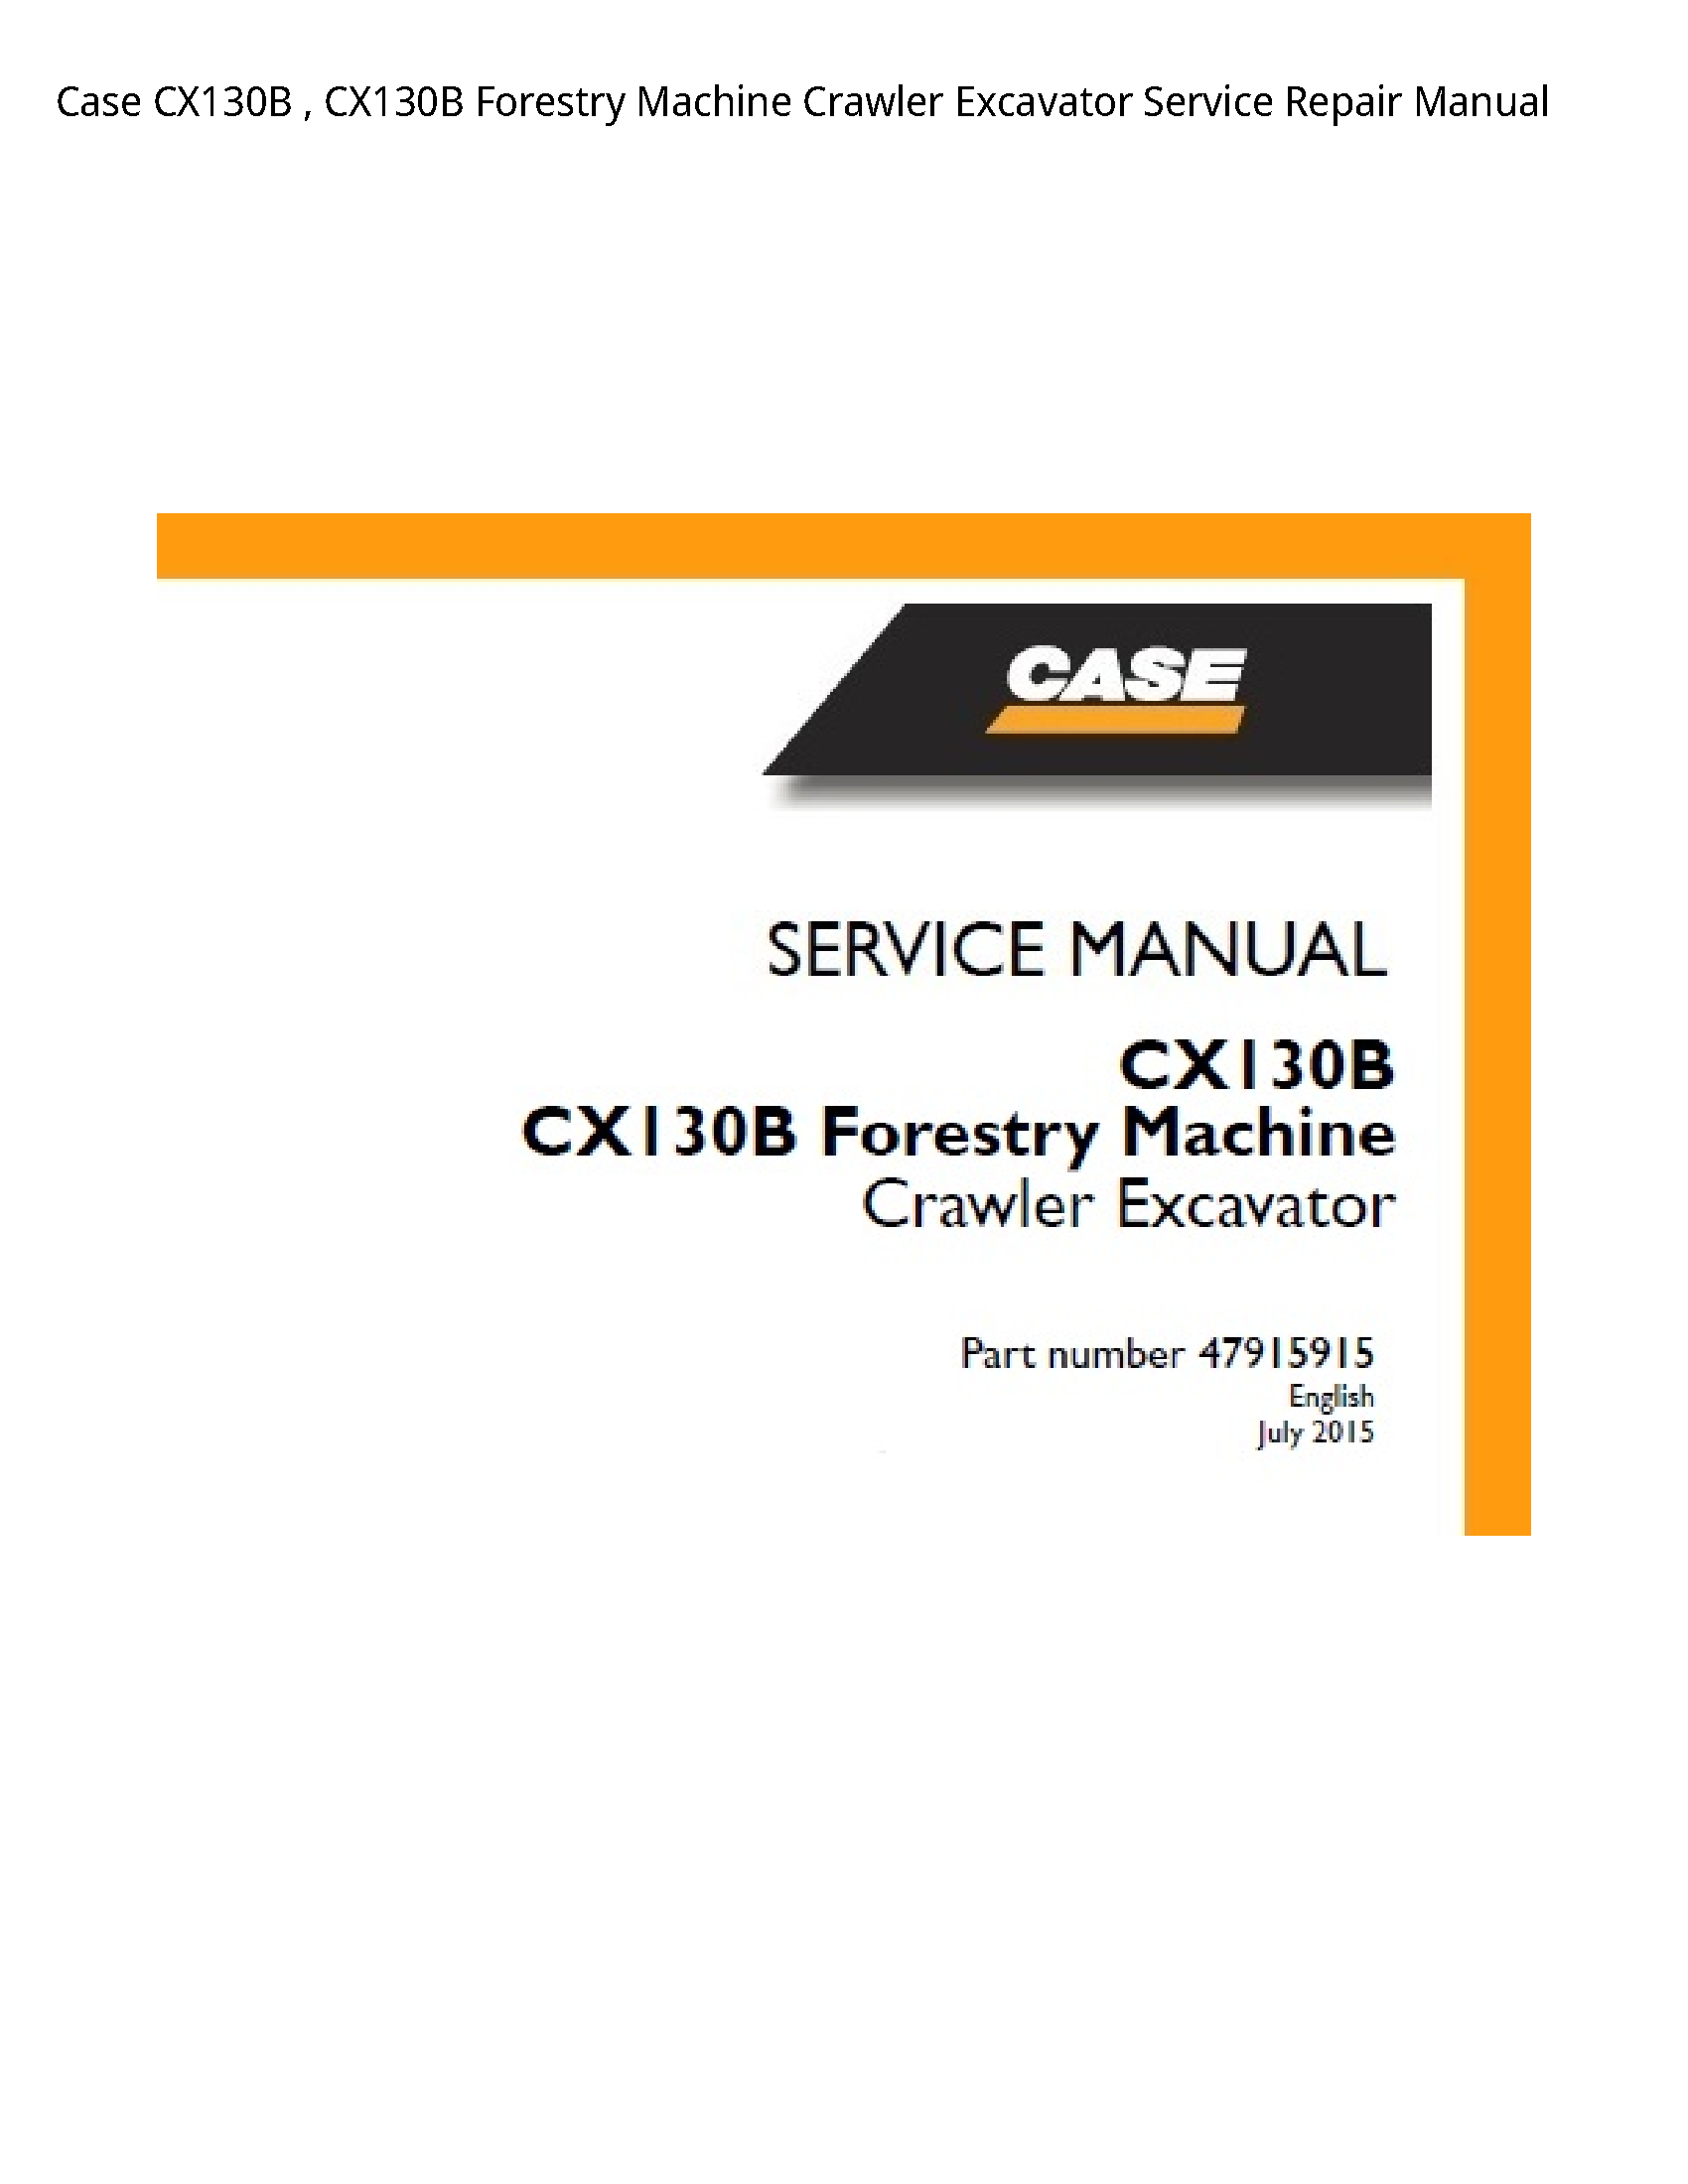 Case/Case IH CX130B Forestry Machine Crawler Excavator manual